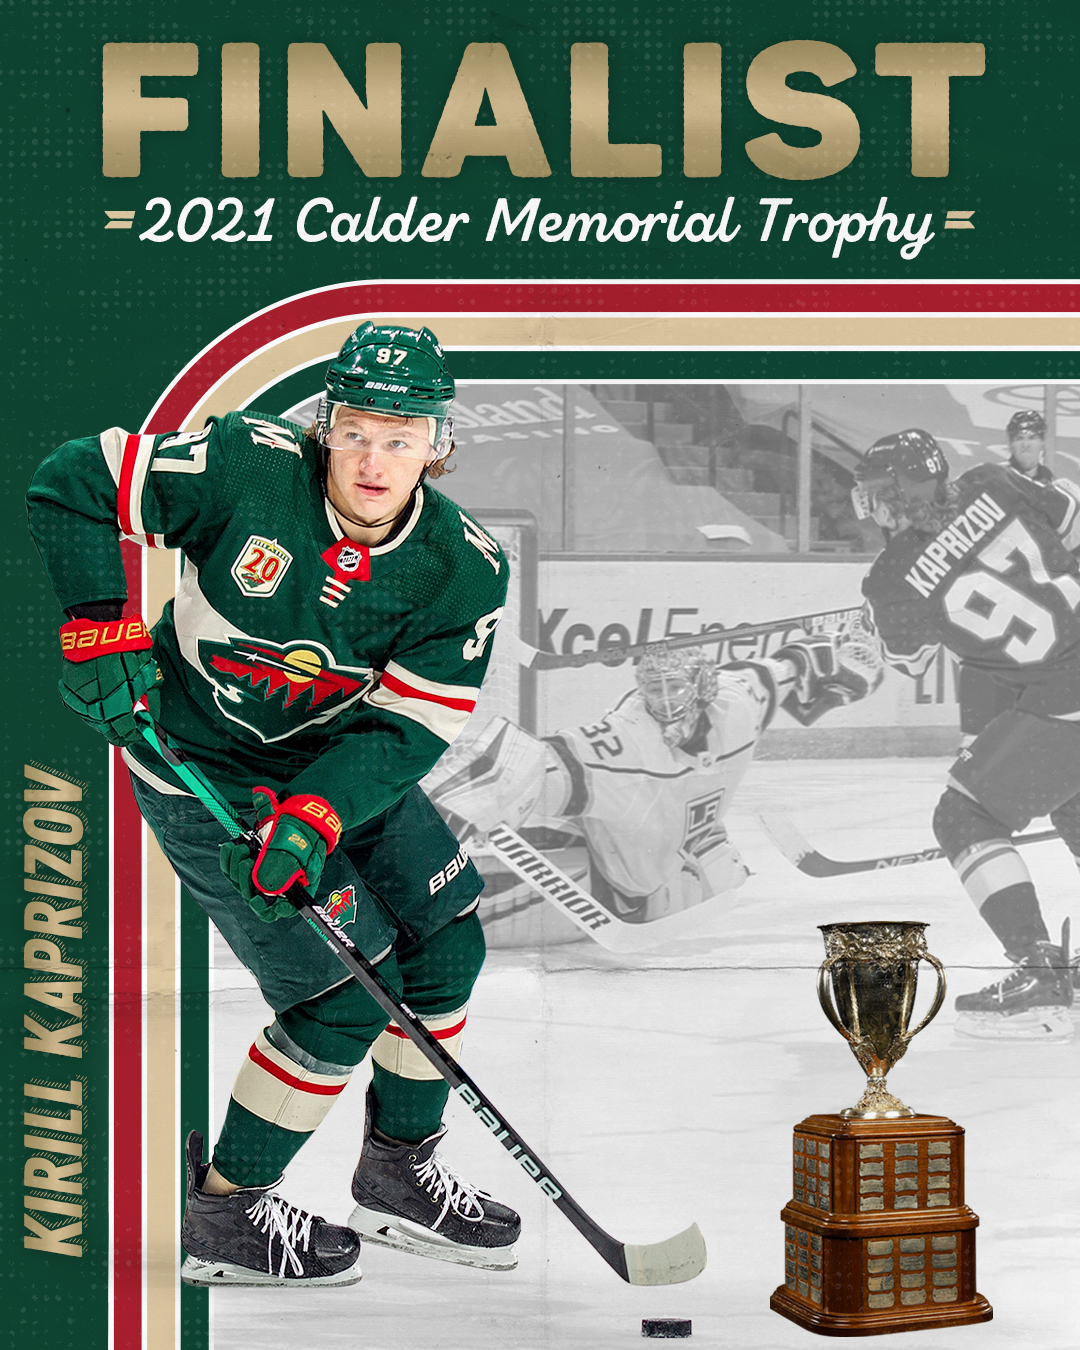 Minnesota Wild: Just give the Calder Trophy to Kirill Kaprizov now